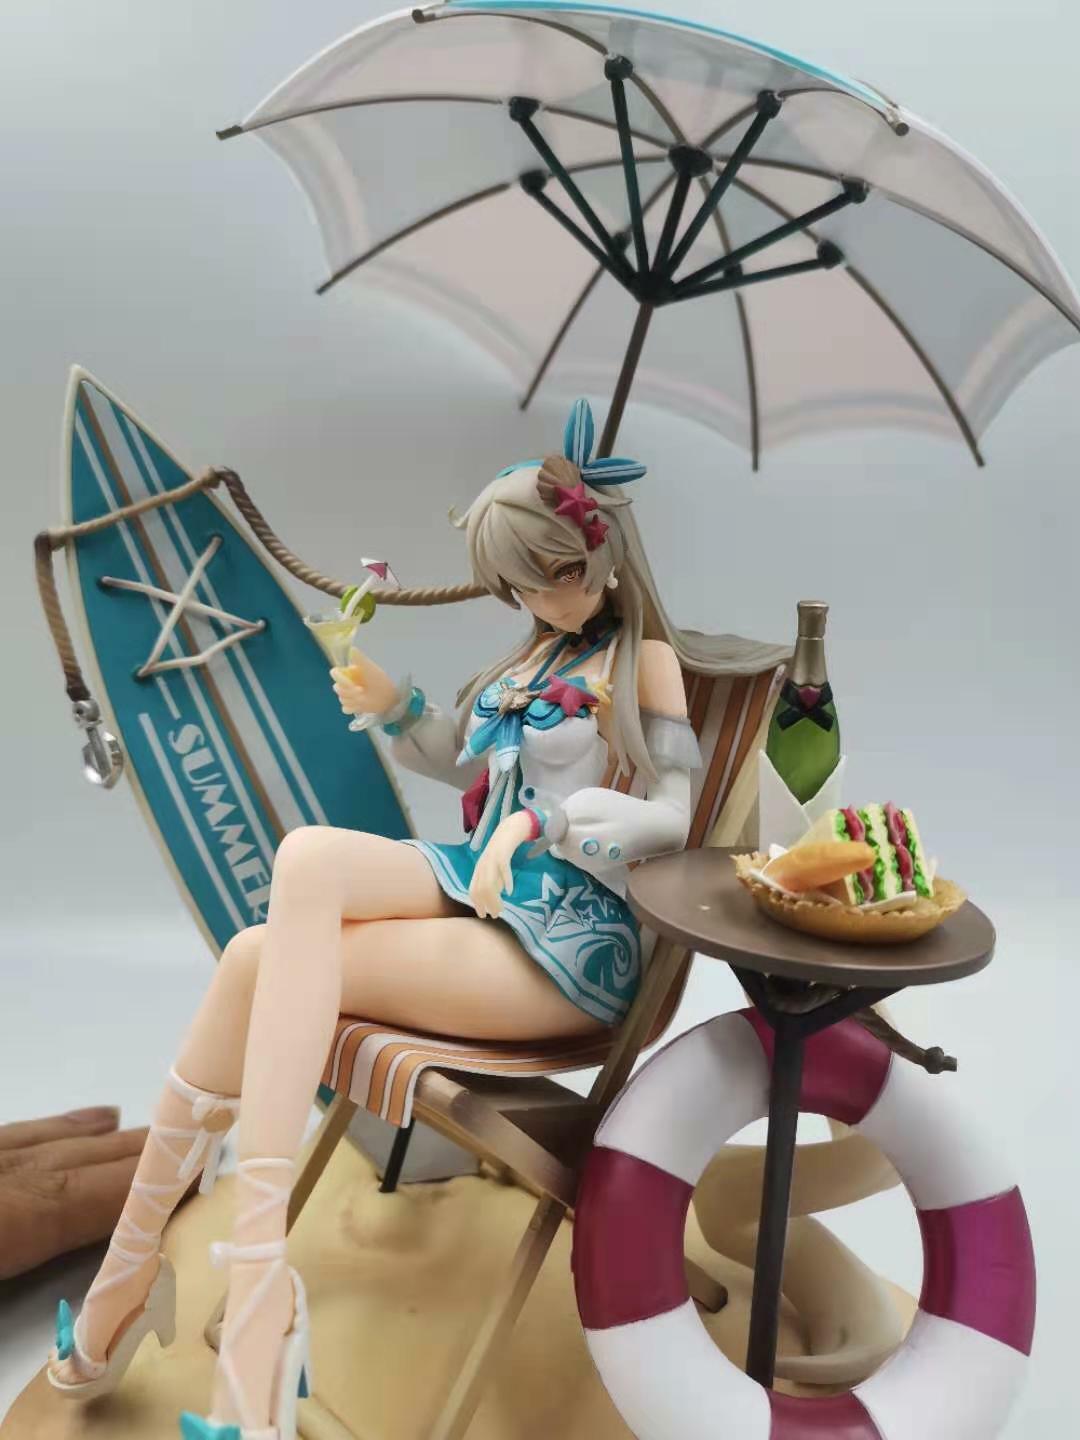 NEW 17CM Sandbeach Girl Anime Girl Figures PVC Toy Can take off,No Box,as Gifts